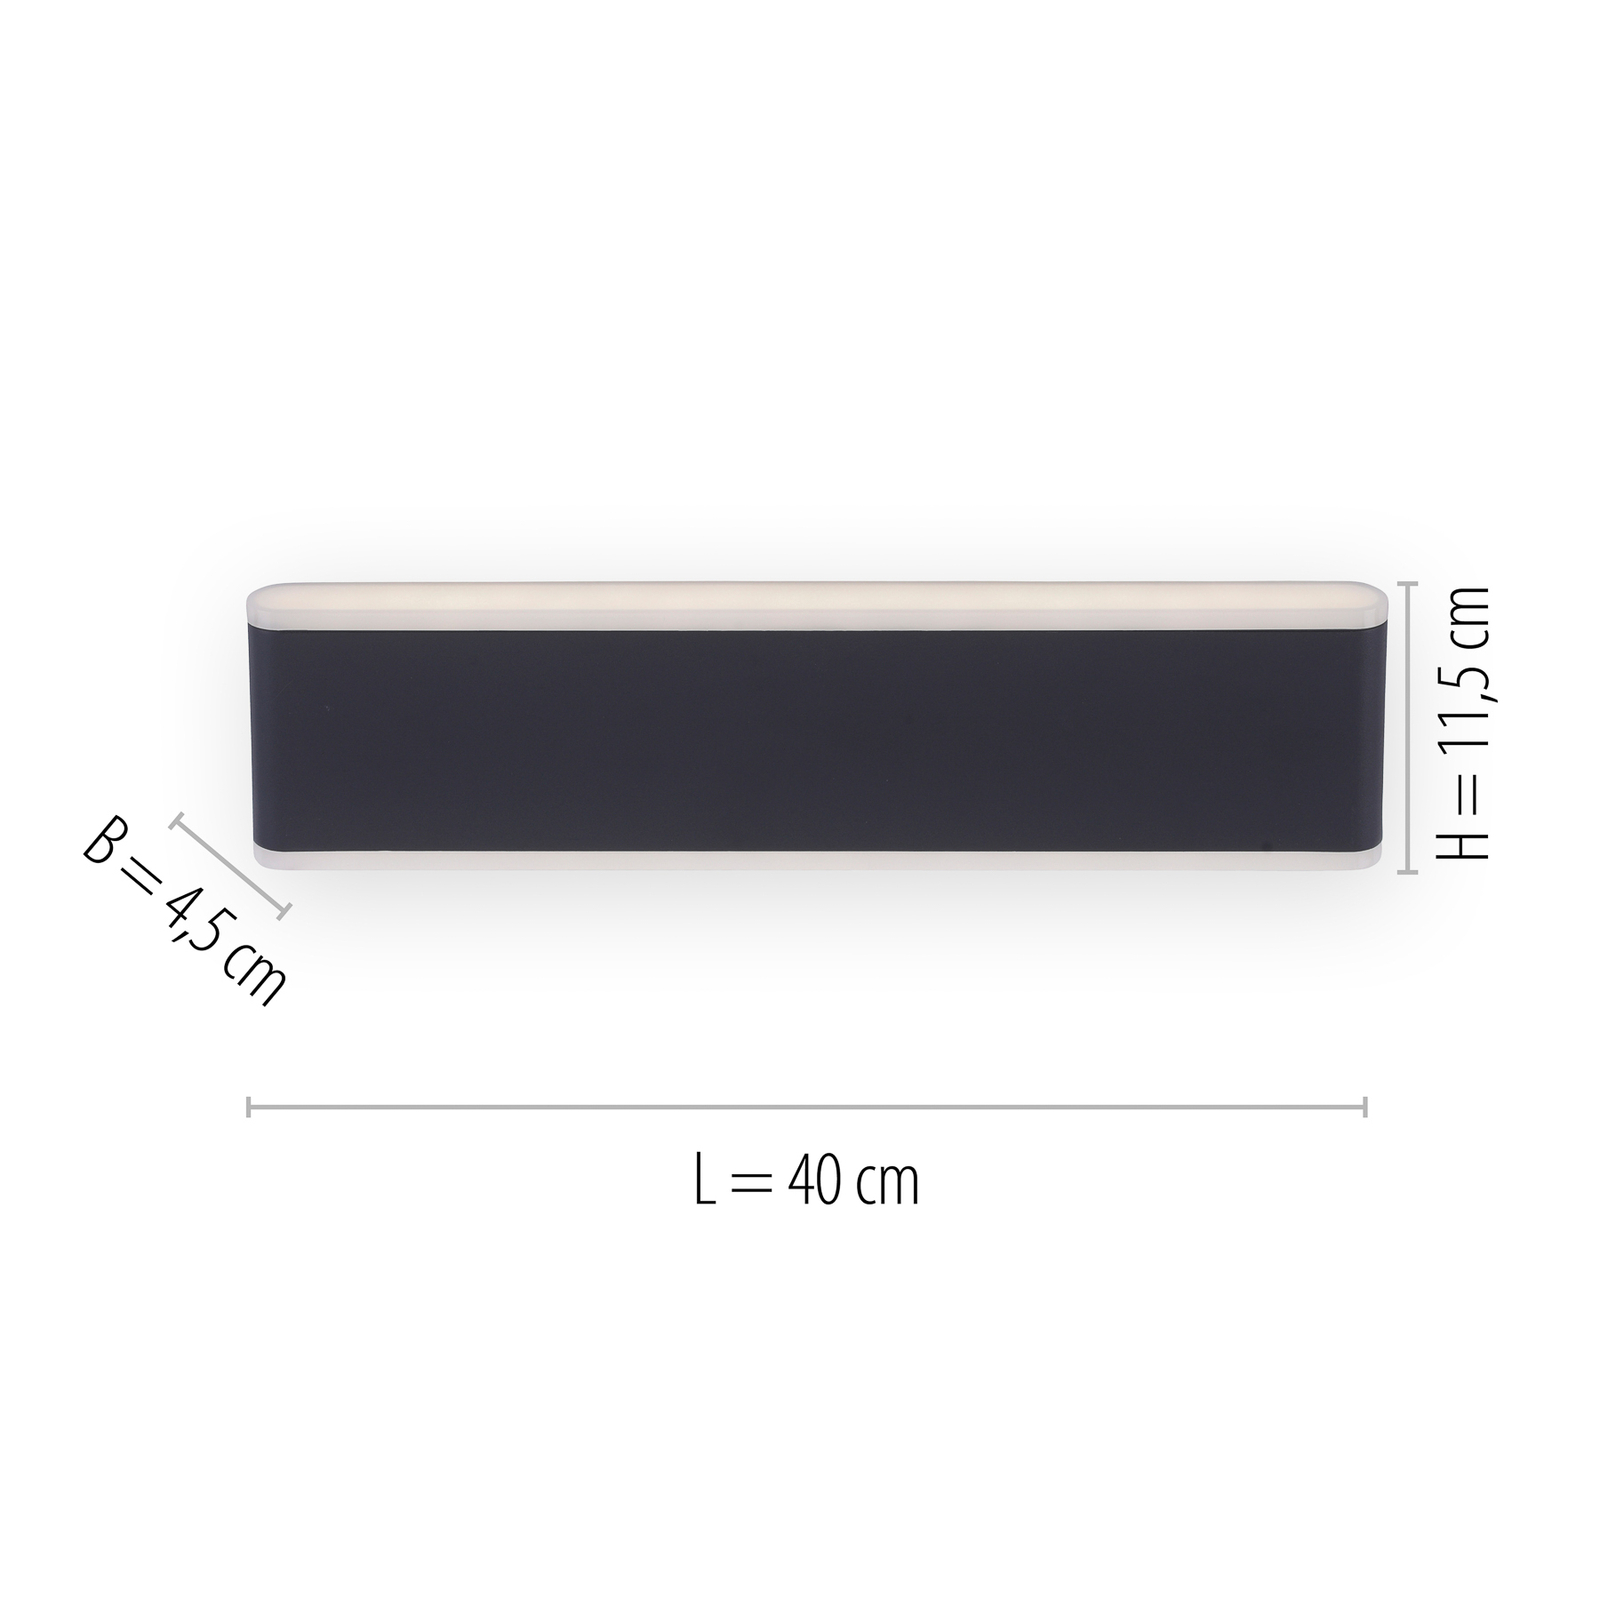 Kinkiet zewnętrzny LED Elsa, IP65, szerokość 40 cm